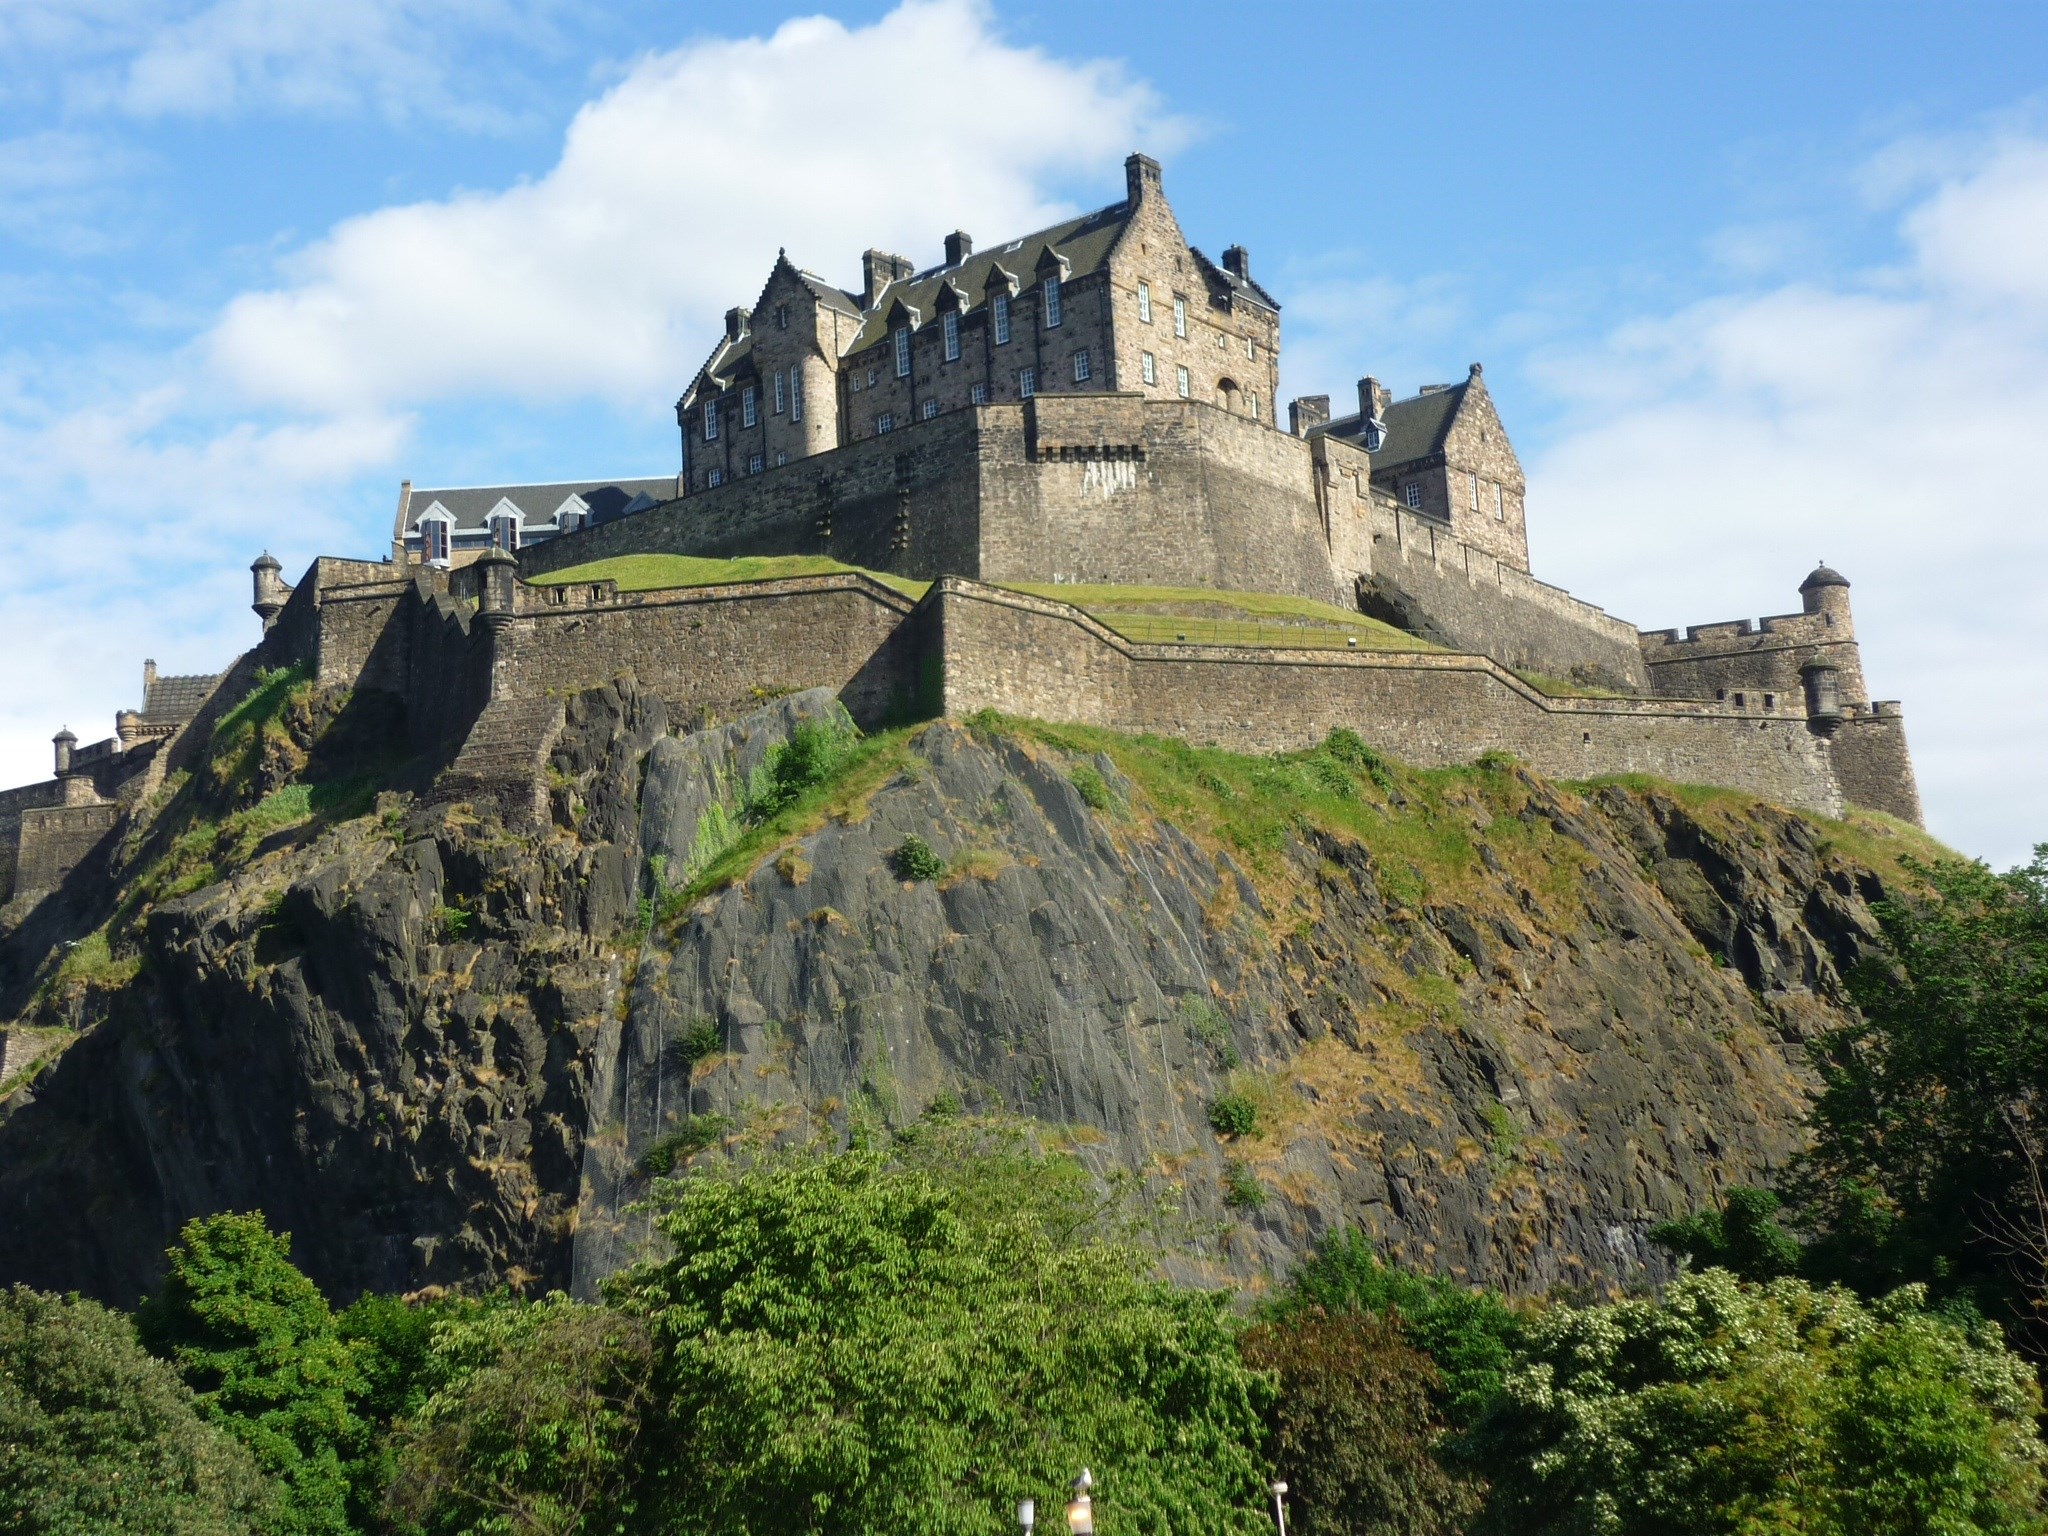 1080p wallpaper pack,castle,fortification,natural landscape,highland,medieval architecture